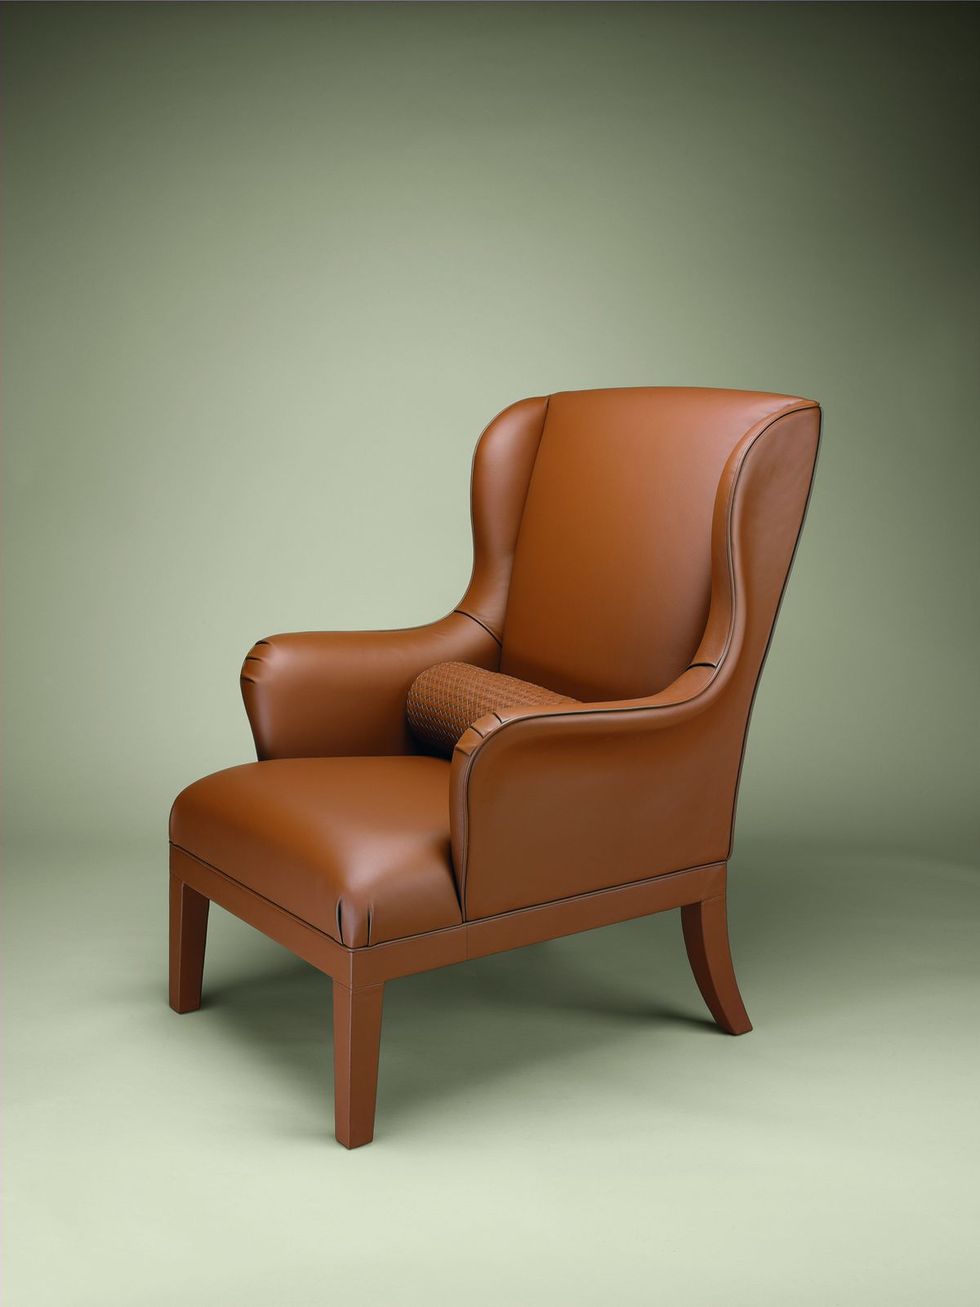 Wood, Brown, Furniture, Chair, Hardwood, Tan, Comfort, Beige, Club chair, Armrest, 